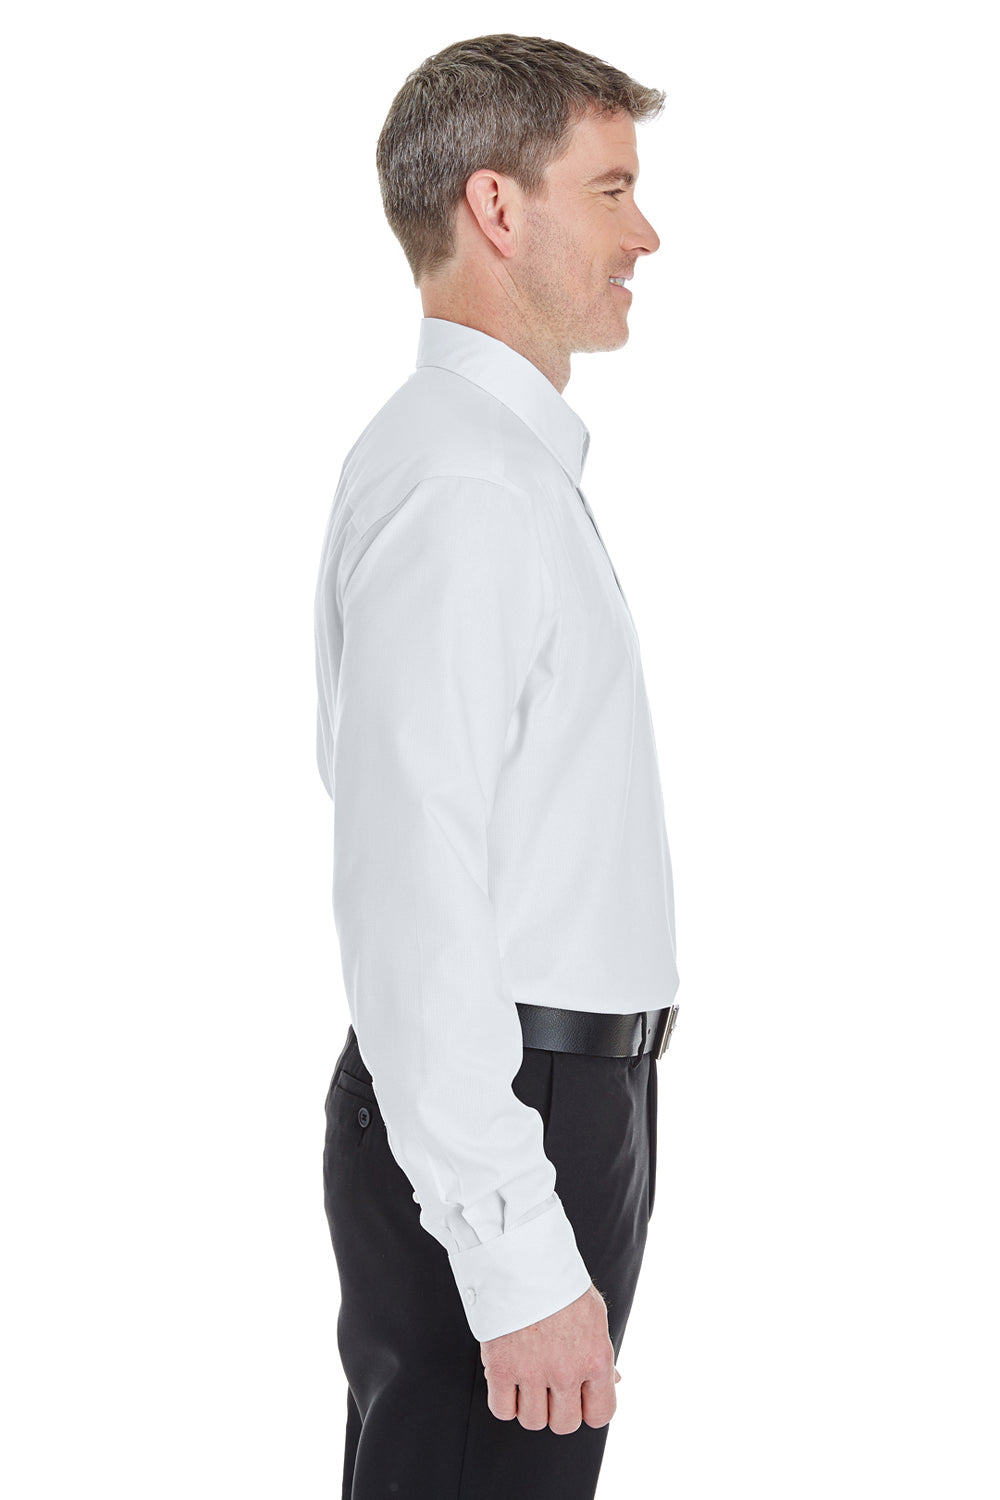 Devon & Jones DG532 Mens Crown Woven Collection Wrinkle Resistant Long Sleeve Button Down Shirt White Side